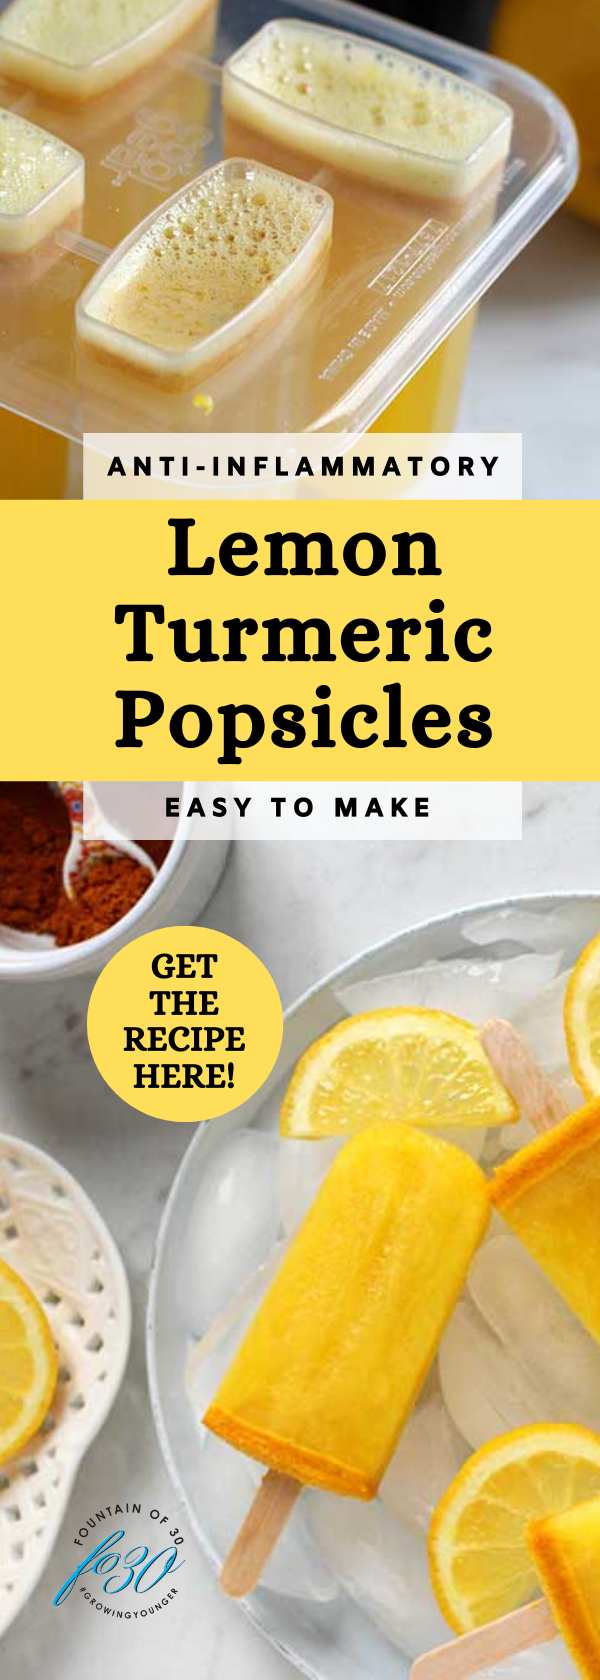 anti-inflammatory lemon turmeric popsicles easy to make fountainof30